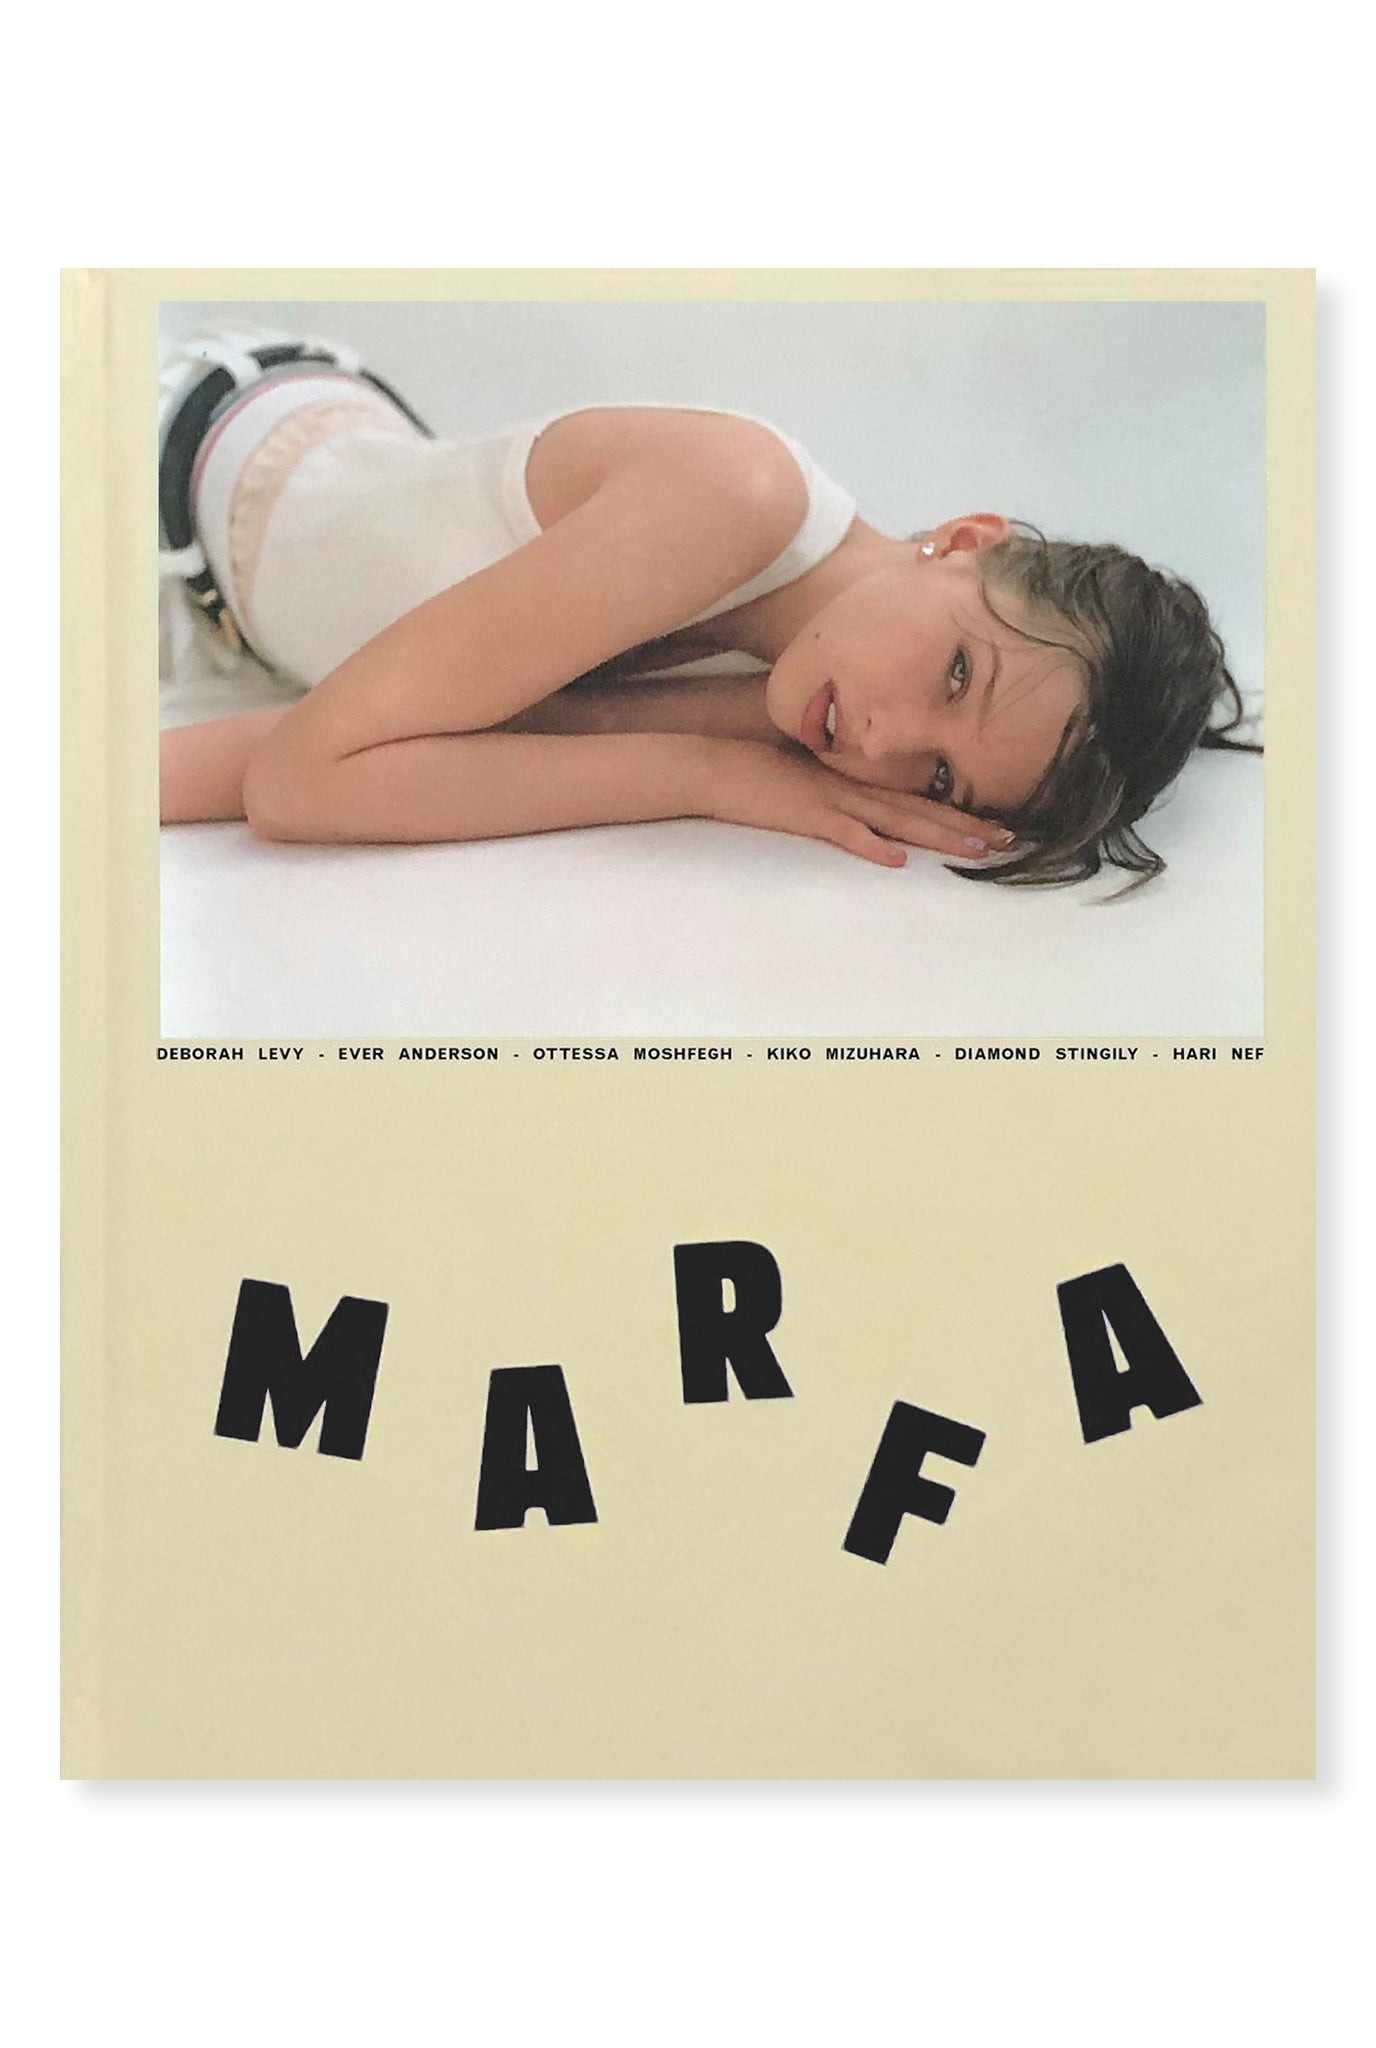 Marfa, Issue 18